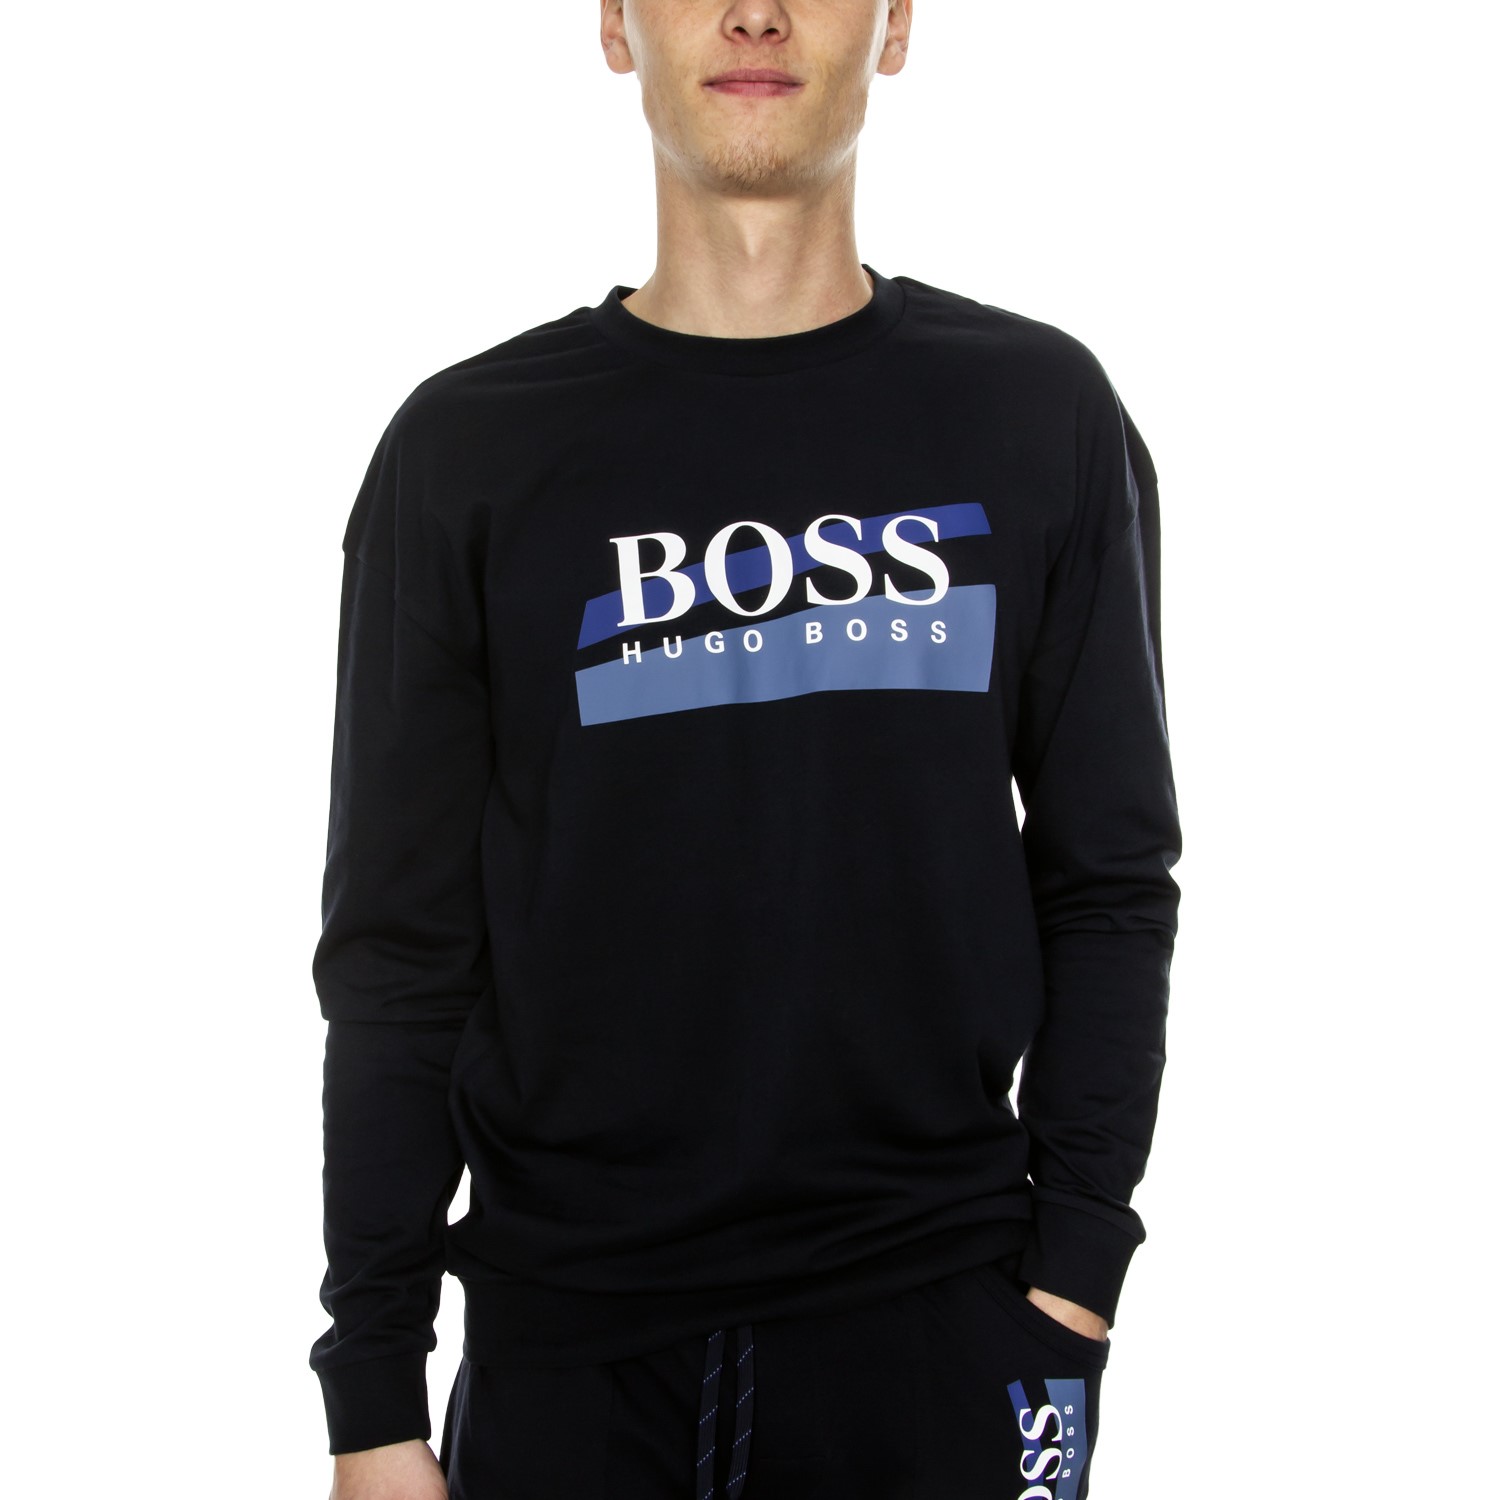 BOSS Authentic Sweatshirt - Hoodies and 